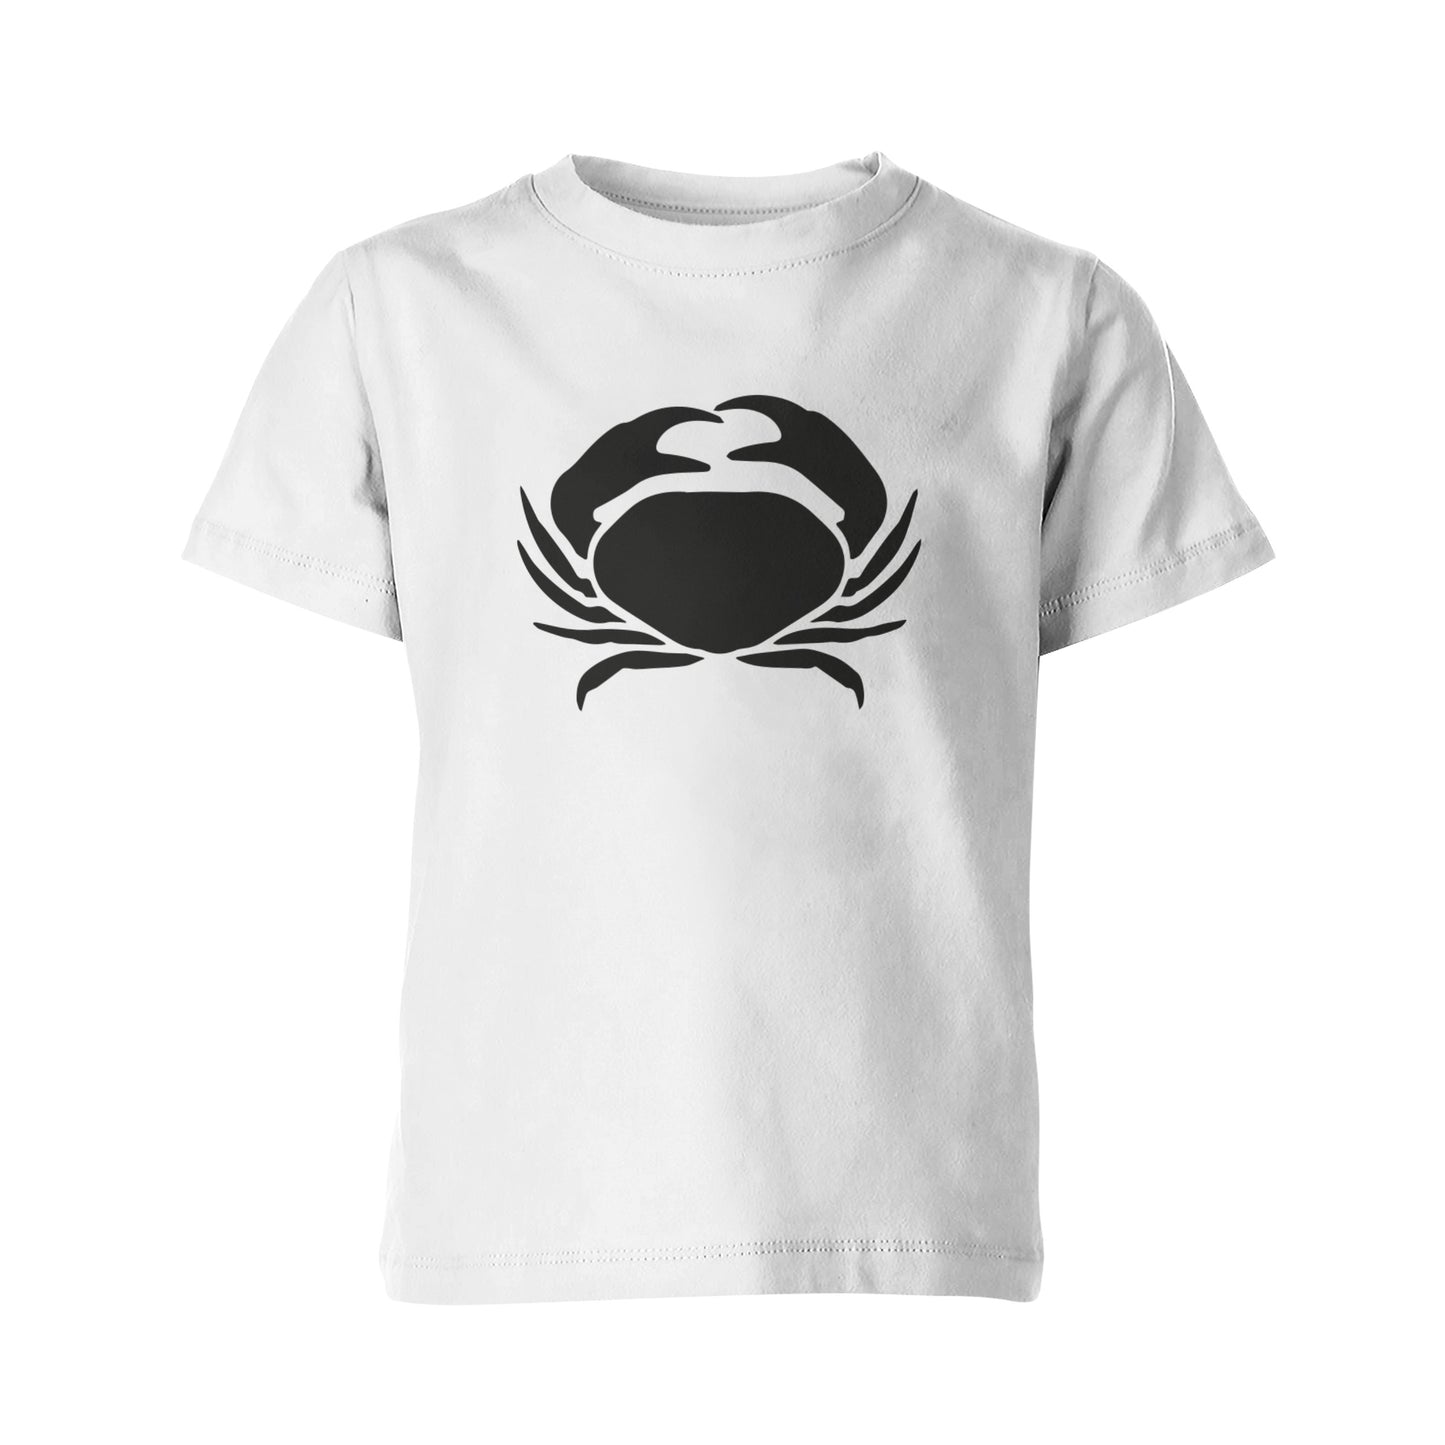 Husis Kids Crab Shirt